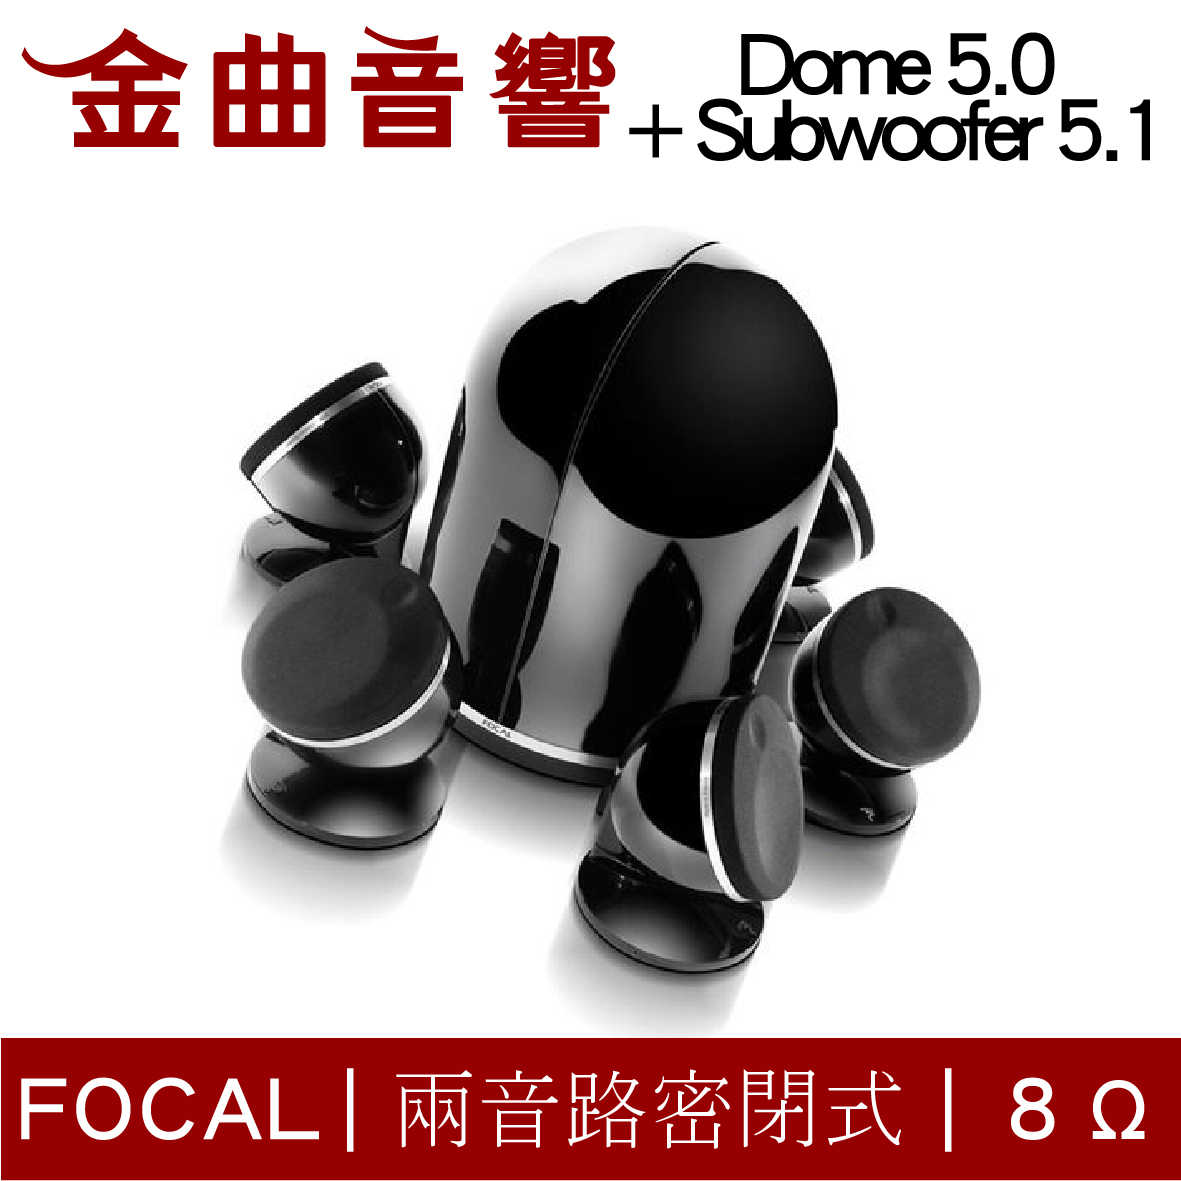 FOCAL Dome 5.0 + Subwoofer 5.1聲道 時尚 鋼烤 多種組合 喇叭 音響 | 金曲音響